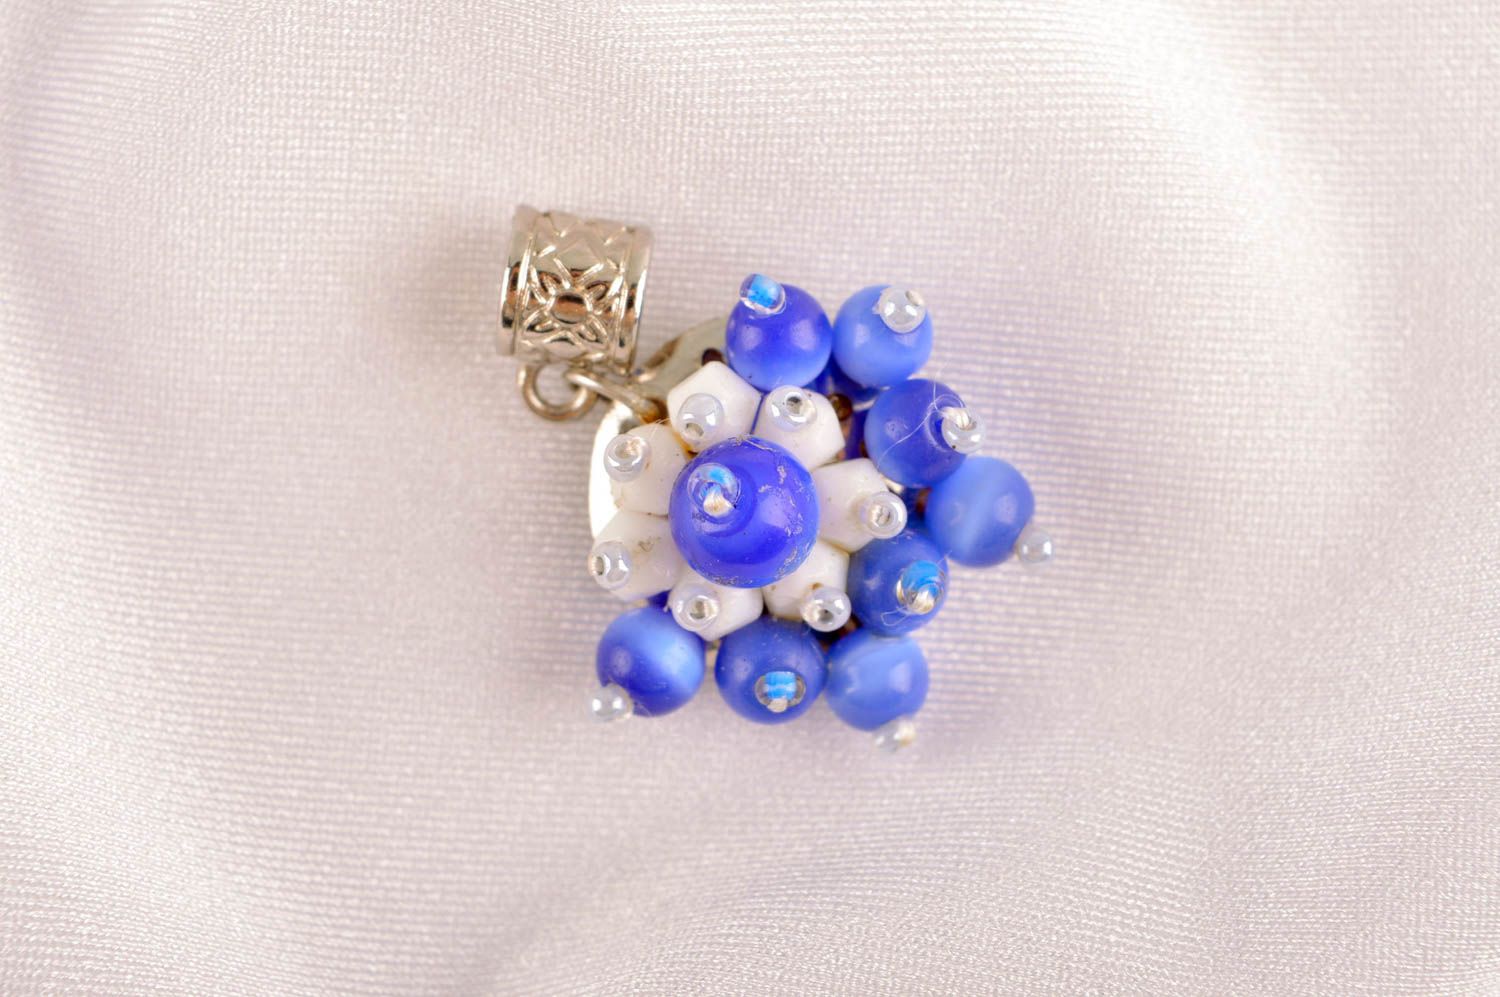 Handmade jewelry beaded jewelry pendant necklace designer accessories gift ideas photo 1